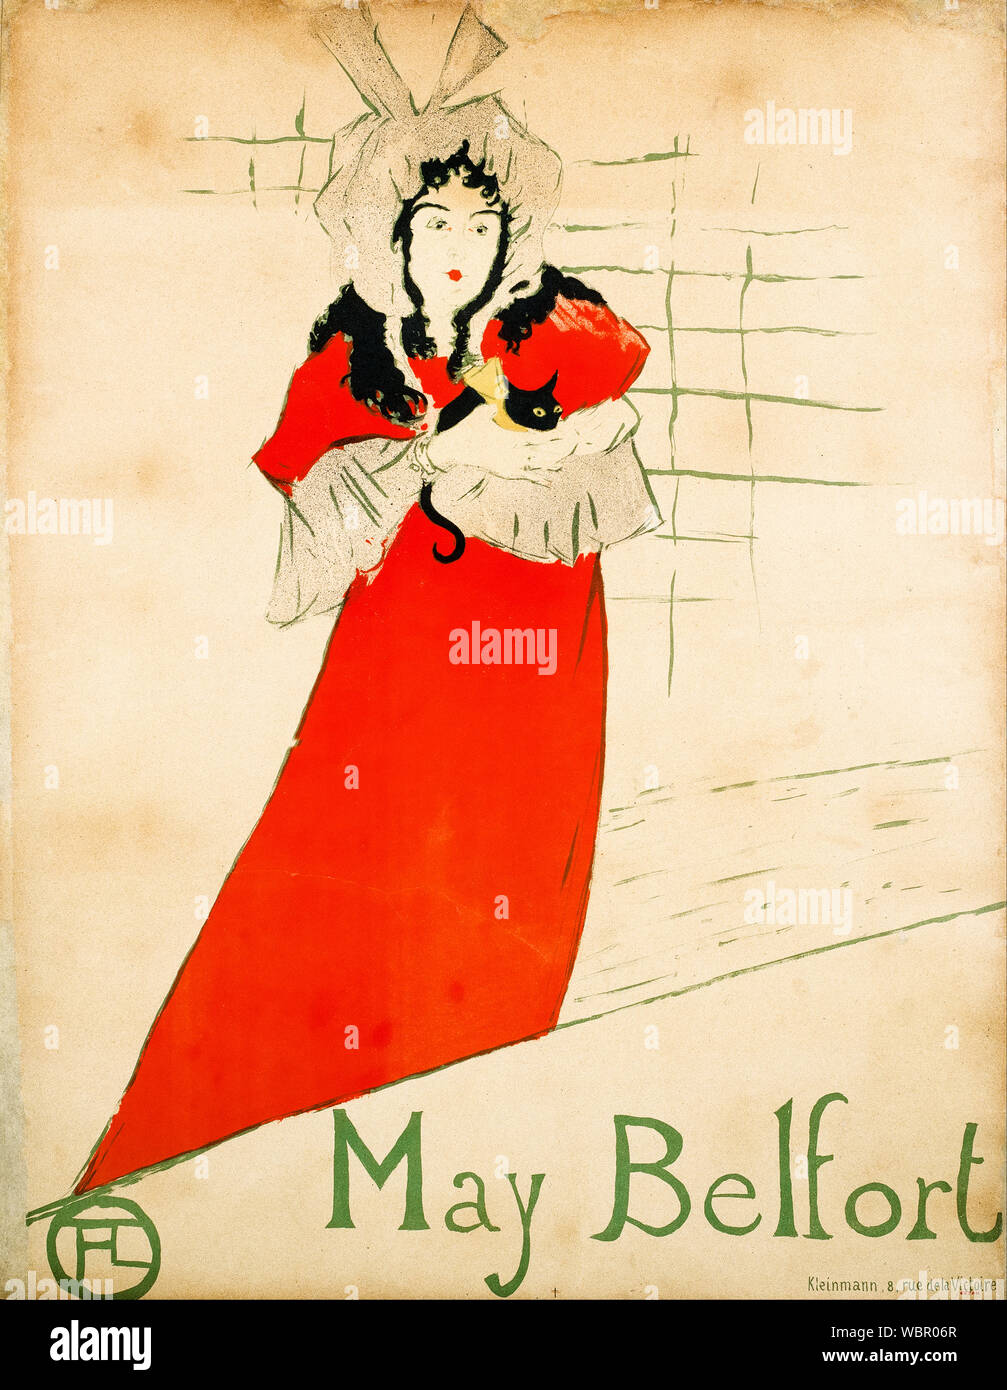 Henri de Toulouse Lautrec, May Belfort, poster, 1895 Stock Photo